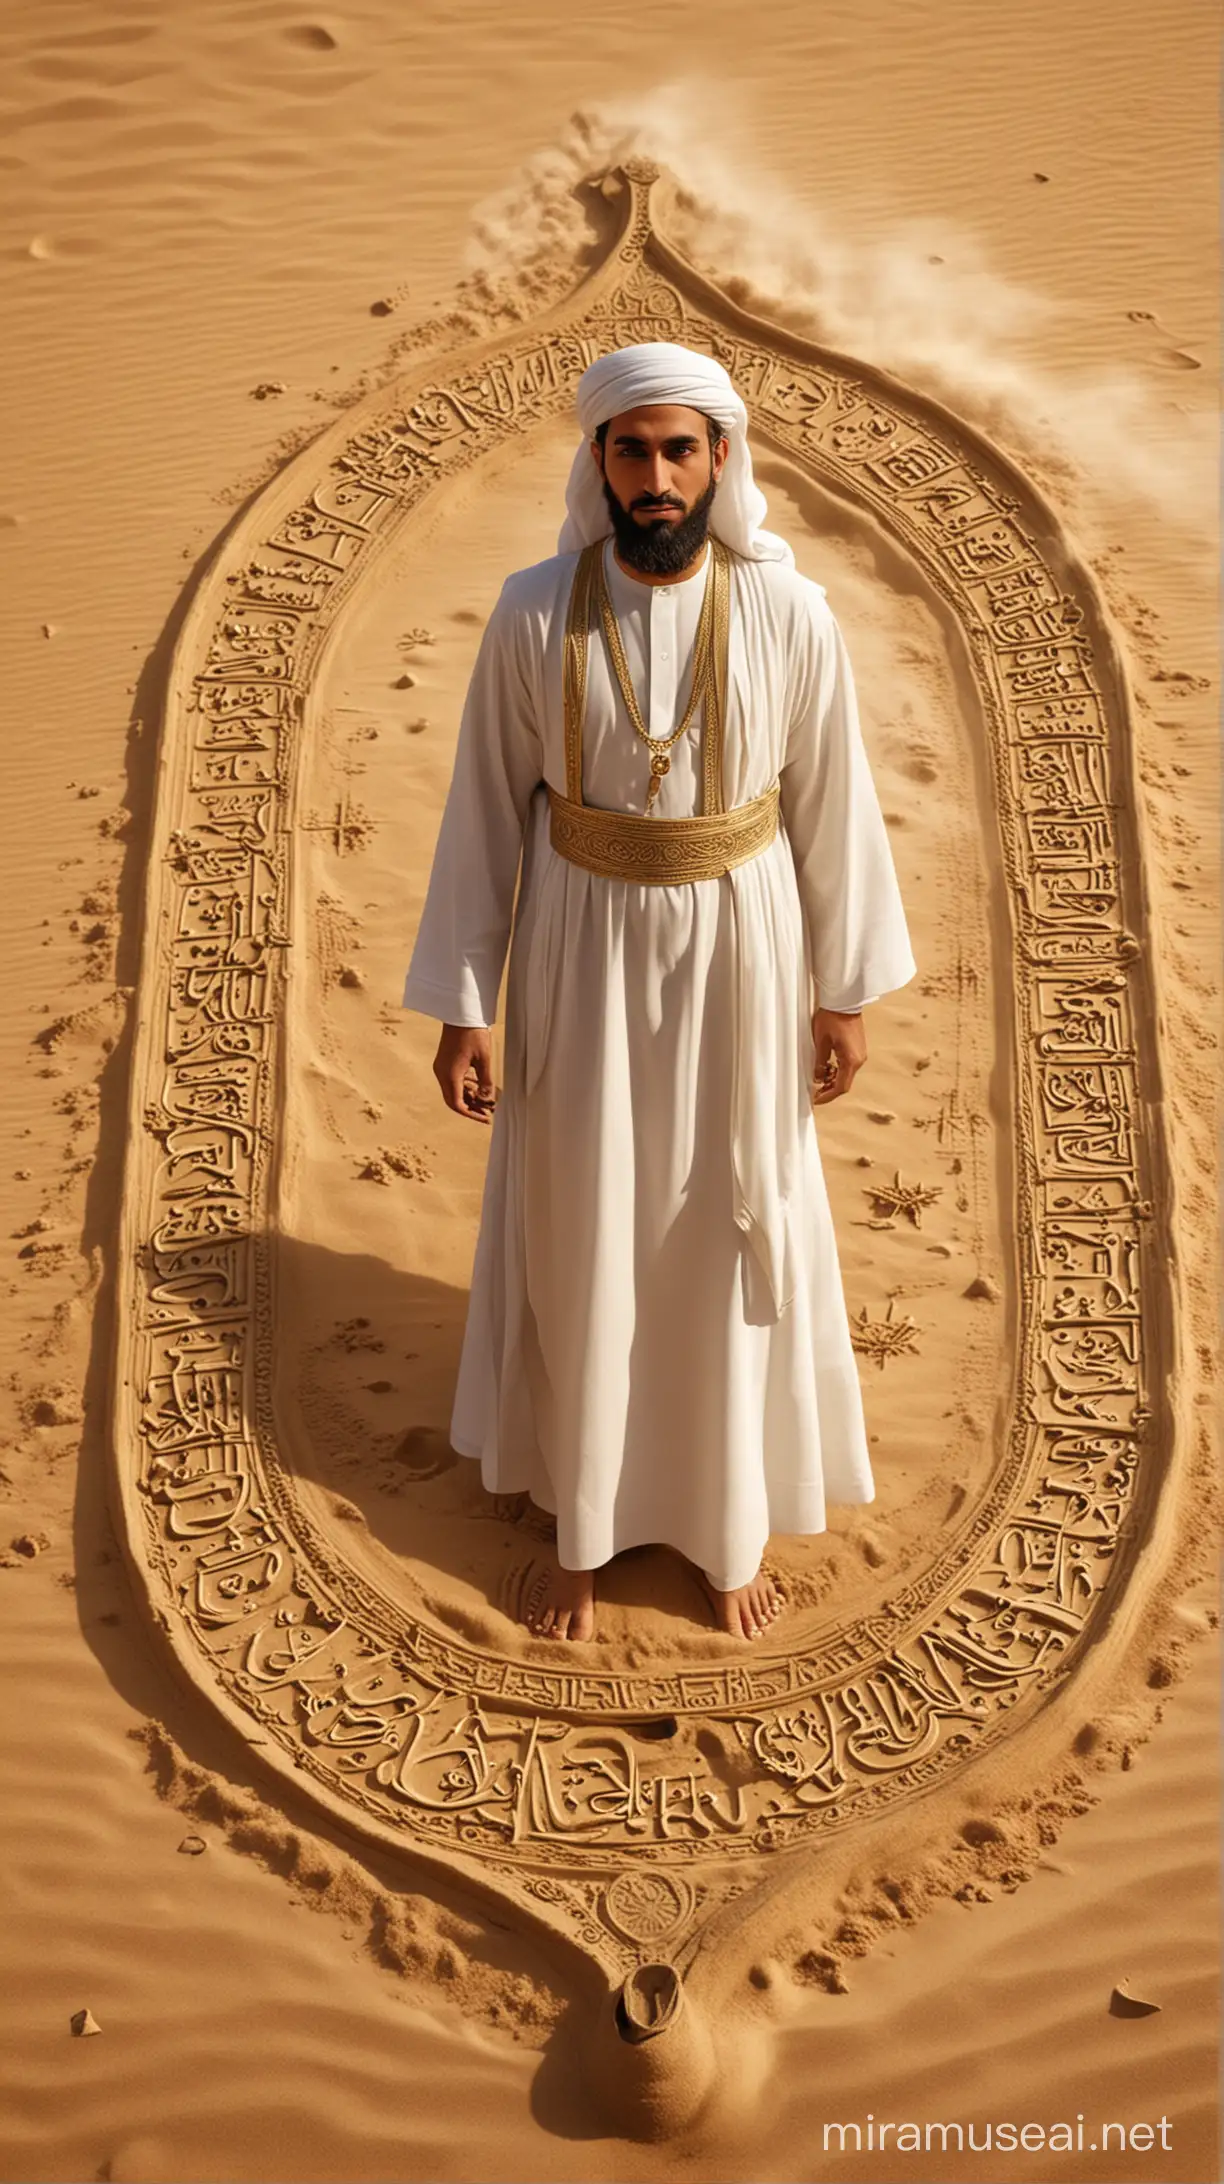 Prophet Muhammad Crafting Constitution of Medina Amidst Radiant Aura in Arabian Sands